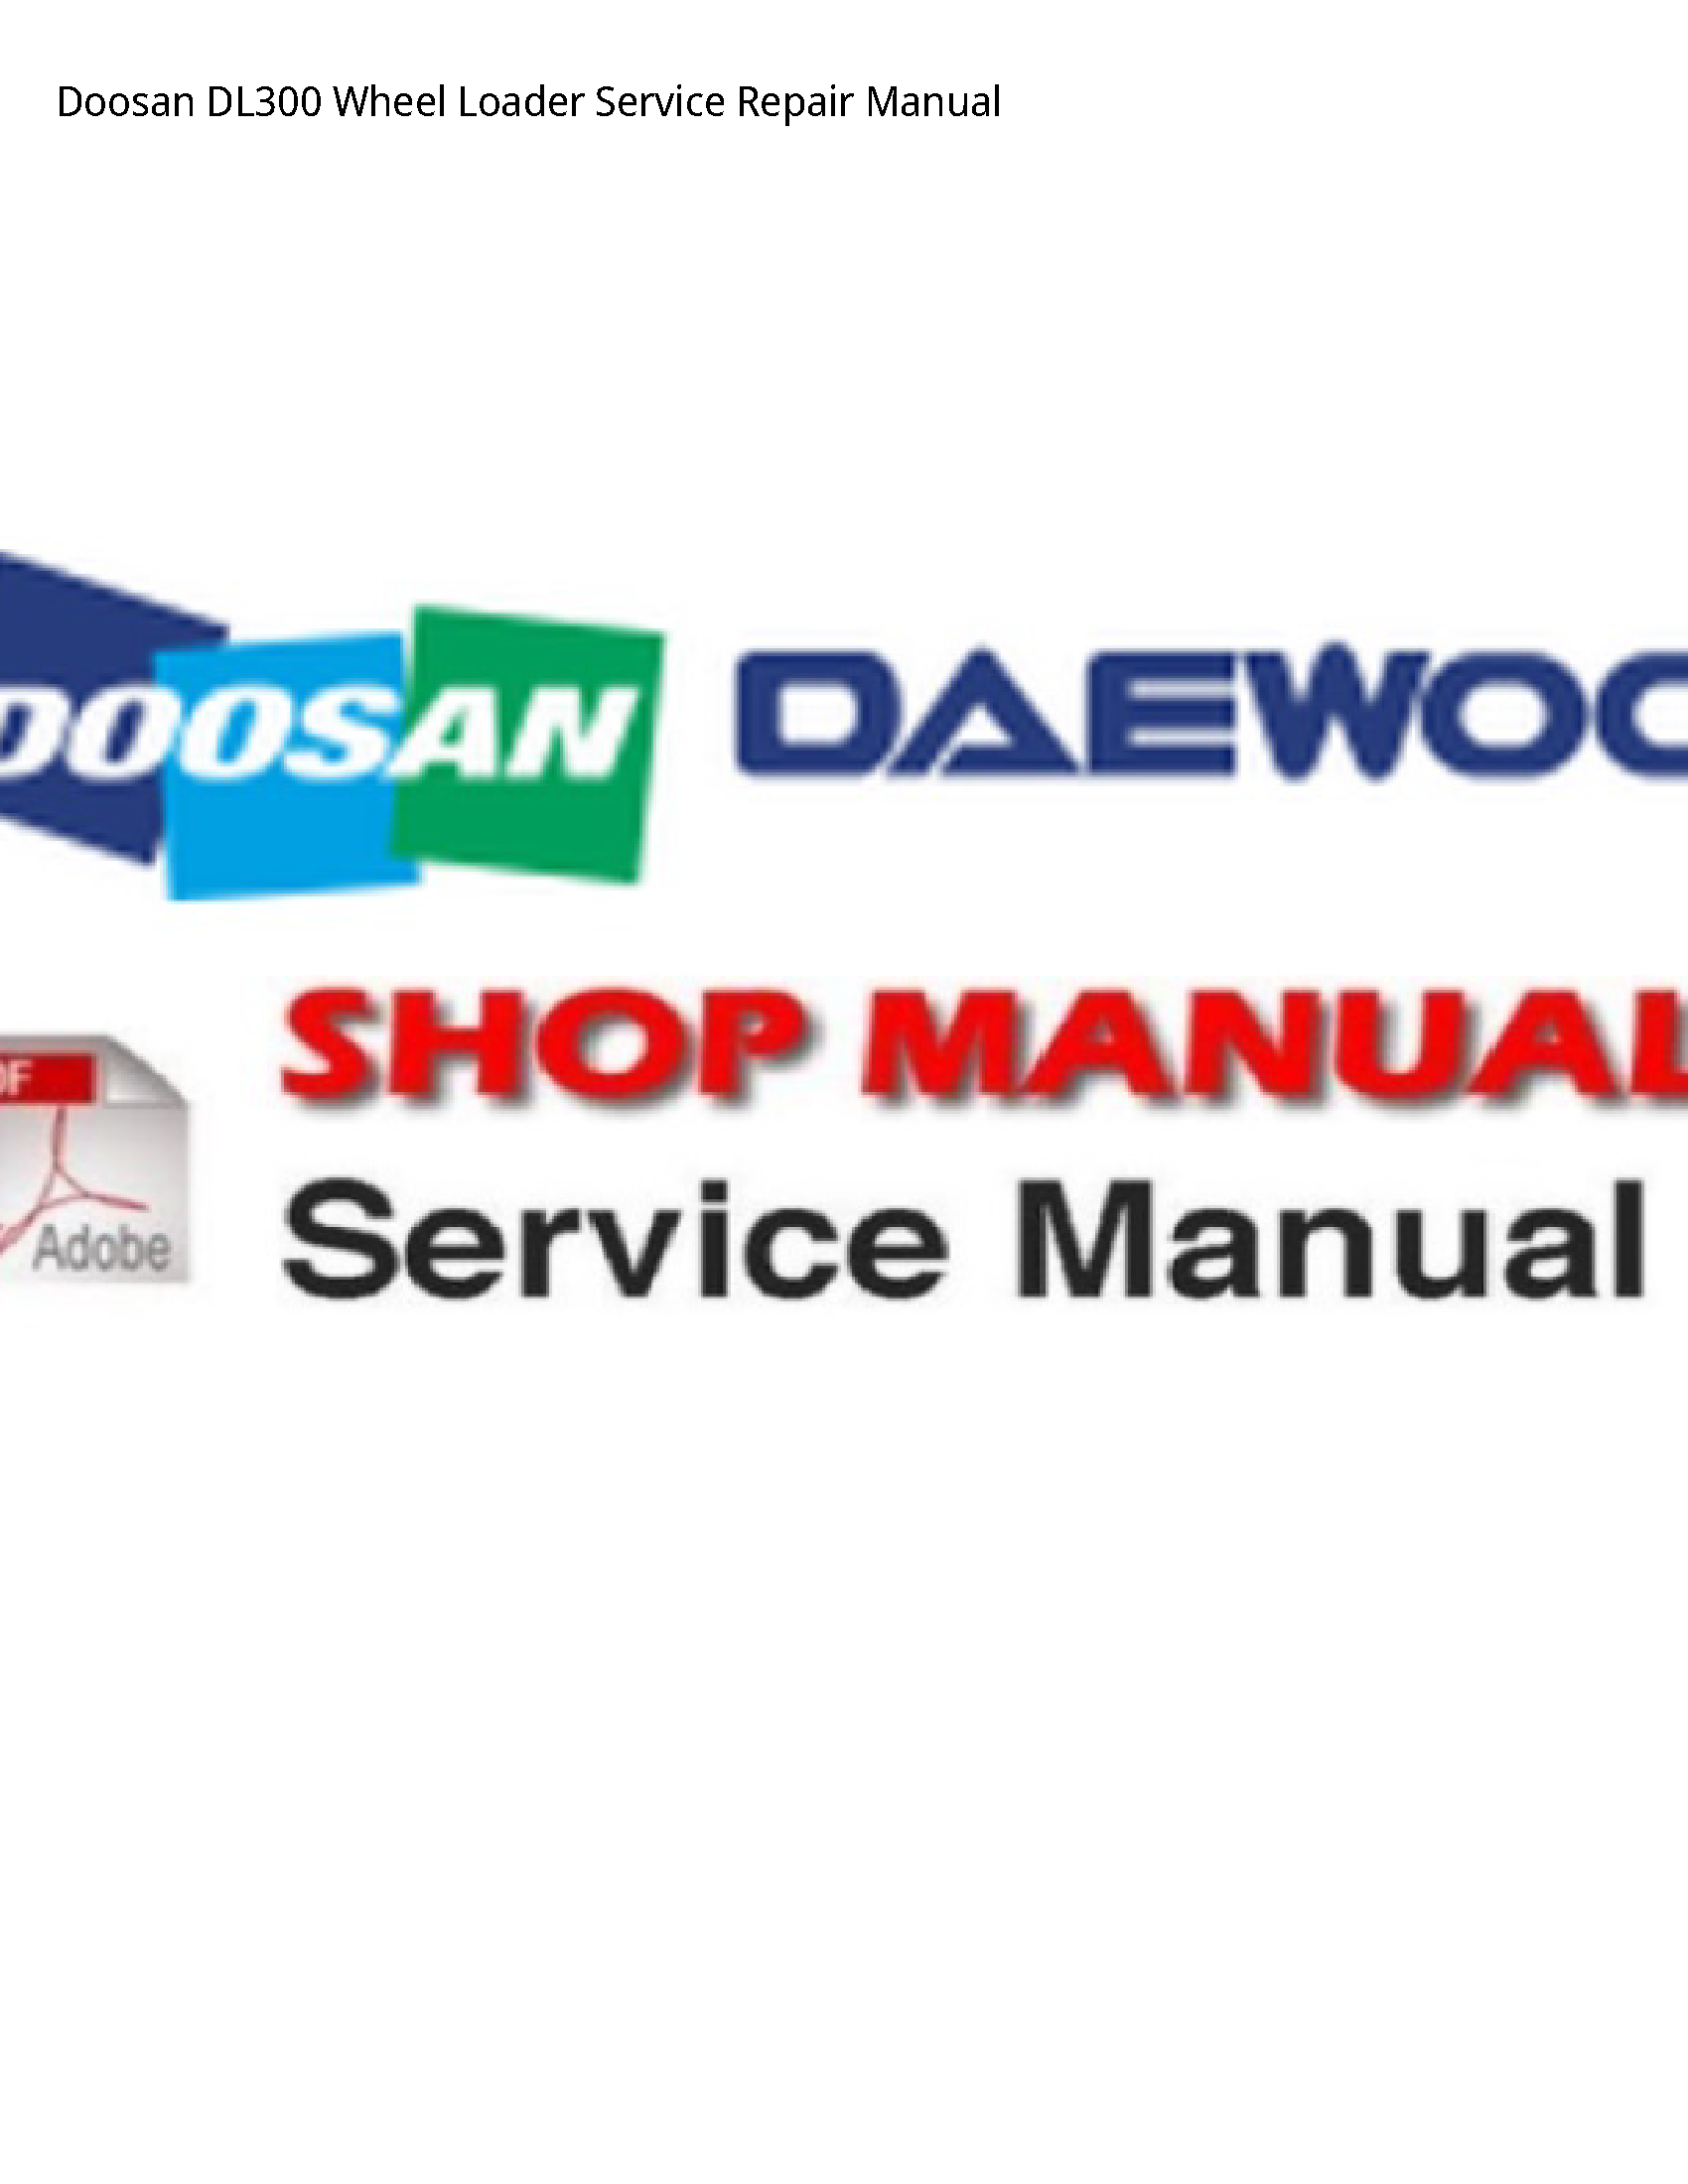 Doosan DL300 Wheel Loader manual